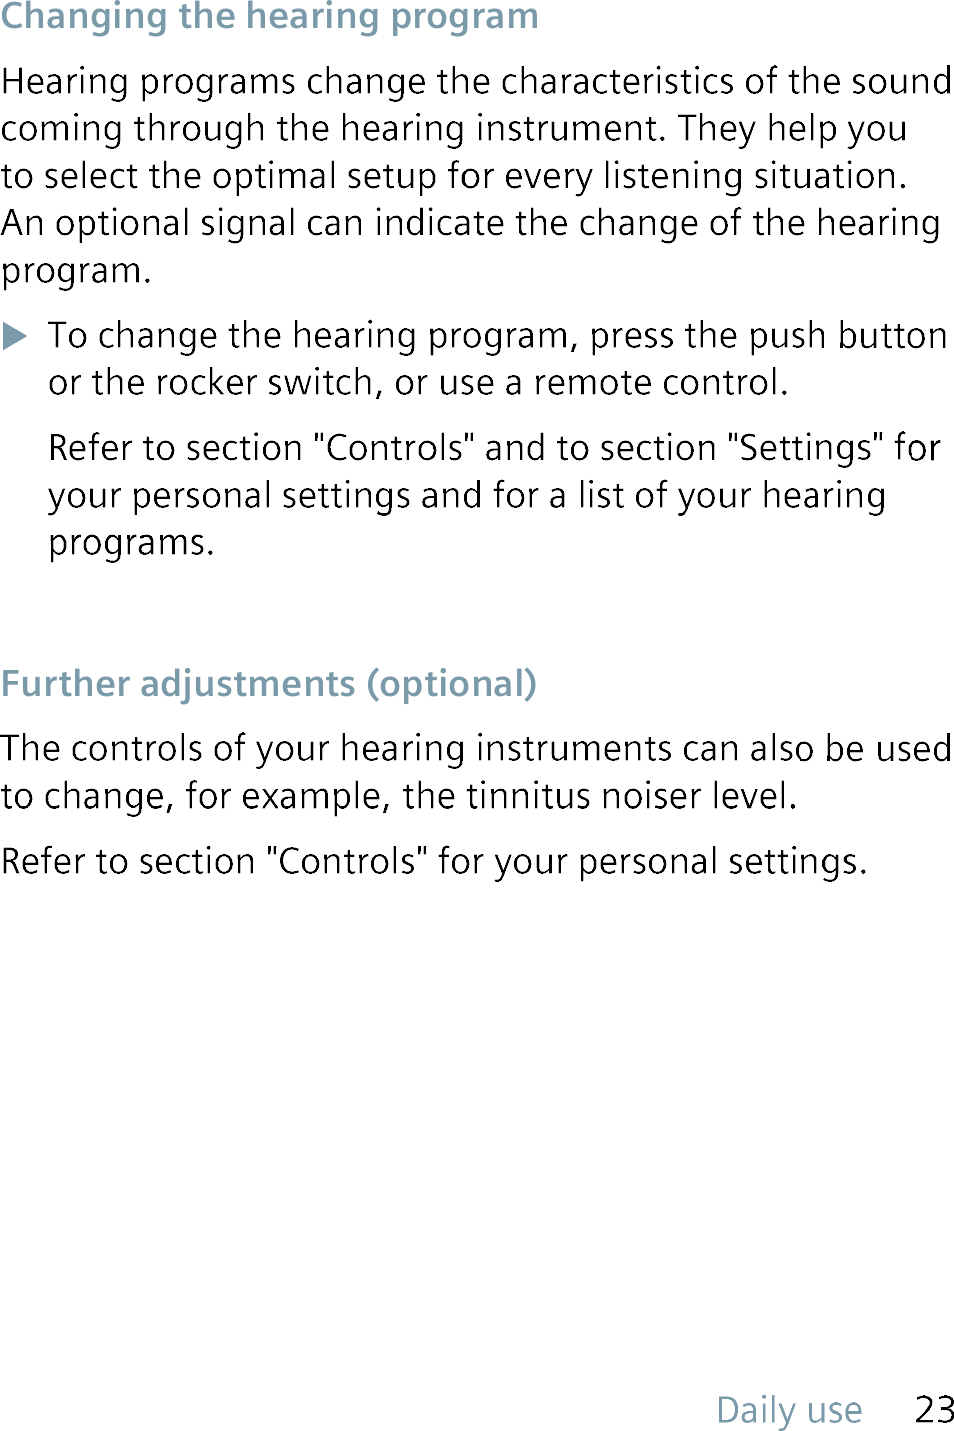 Changing the hearing programFurther adjustments (optional) 